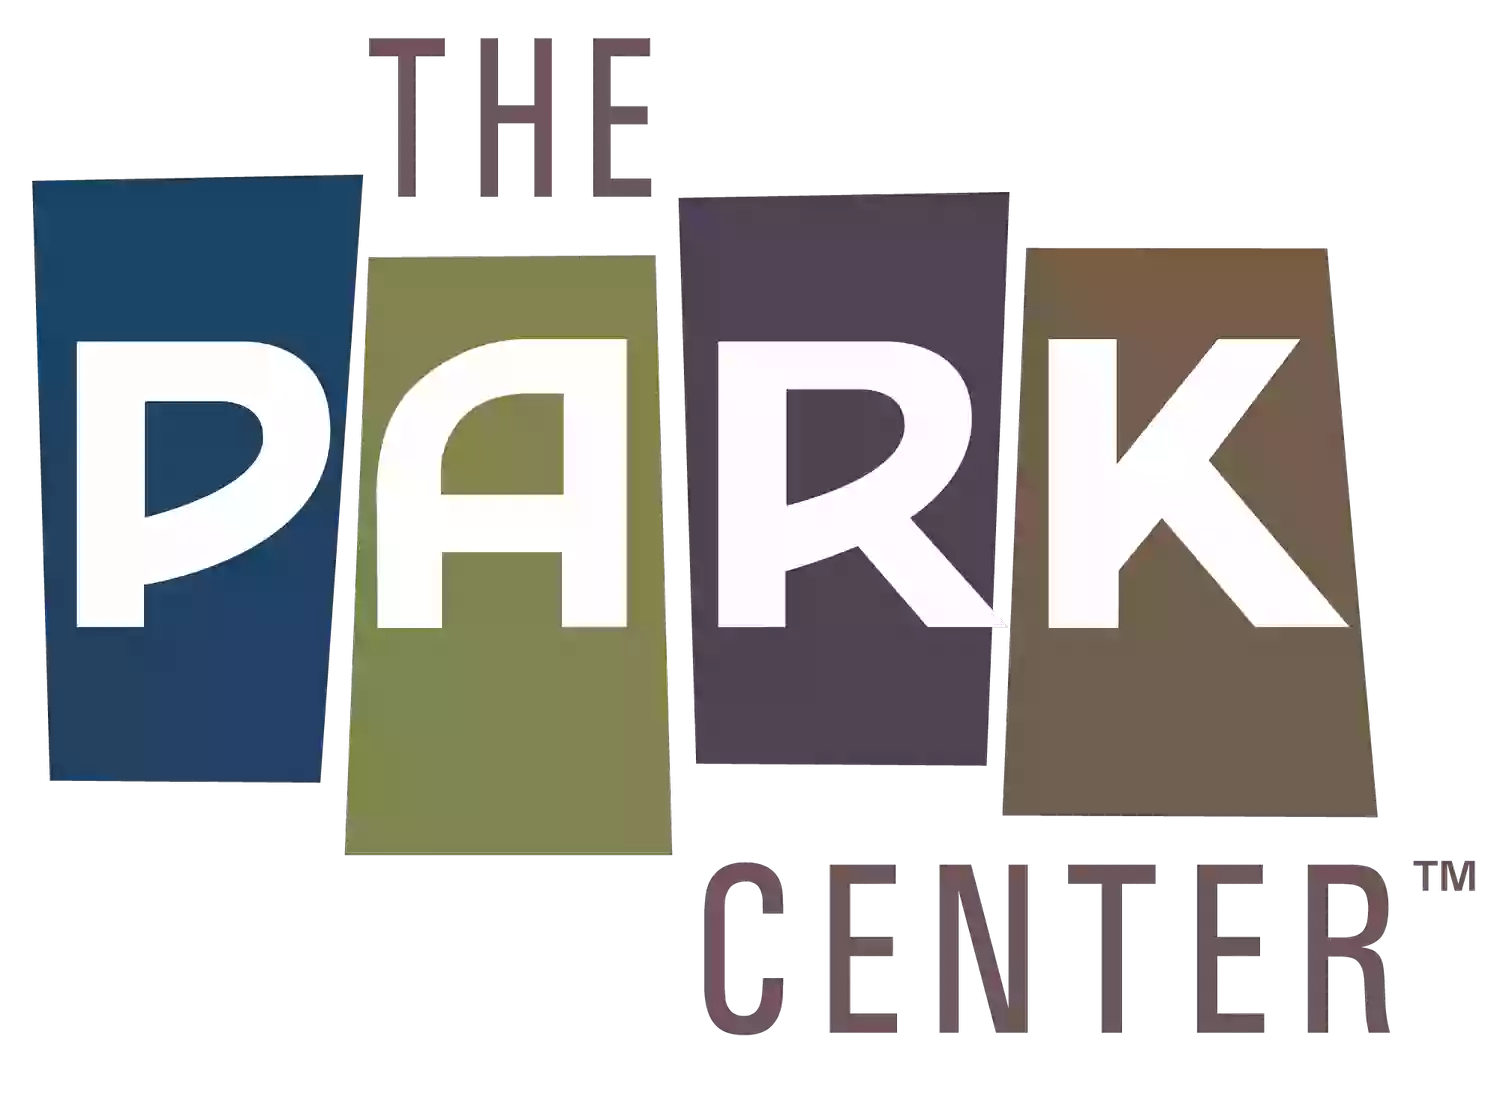 The Park Center